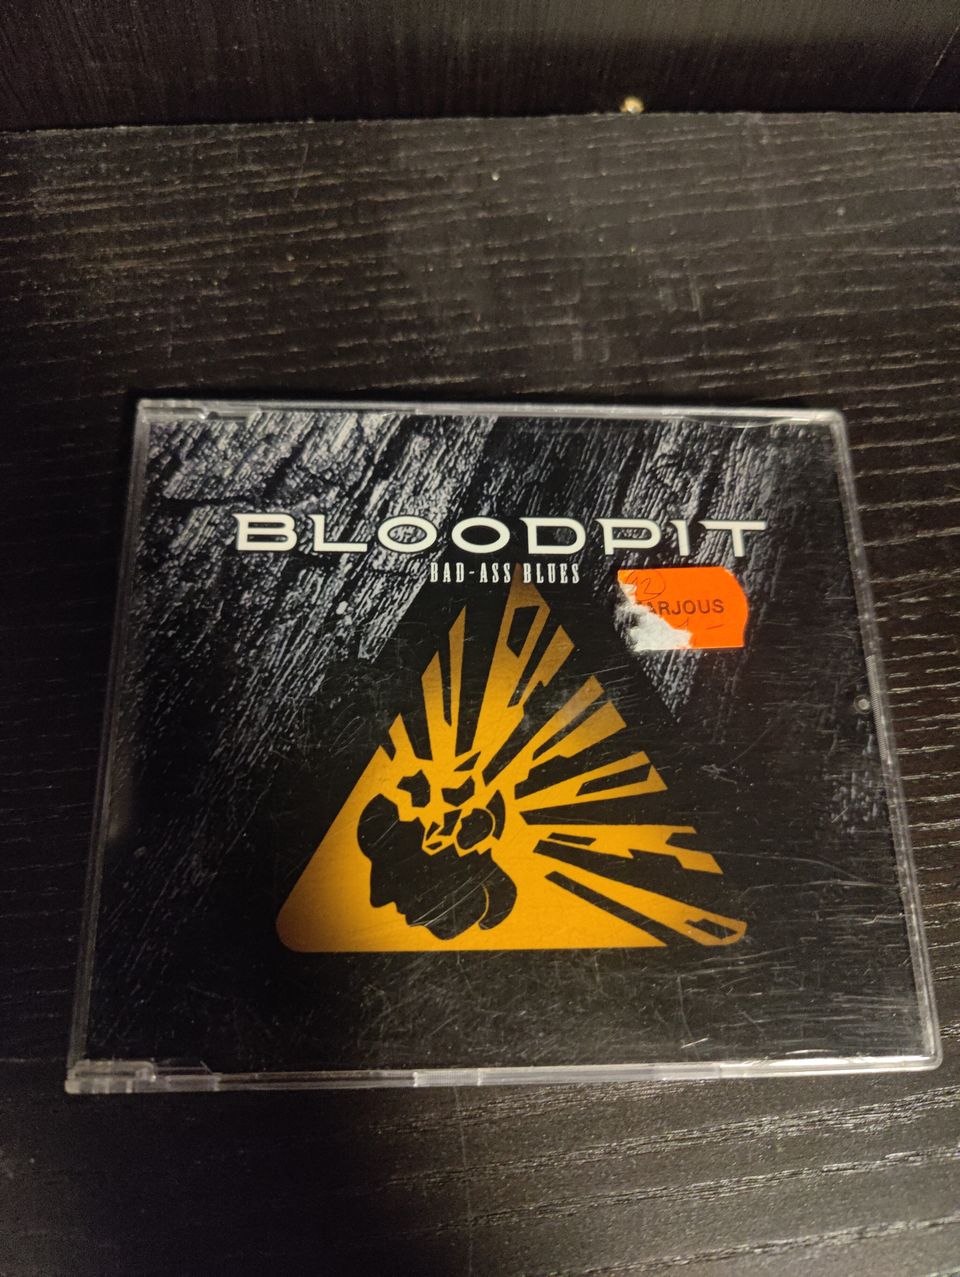 Bloodpit Bad ass blues single cds